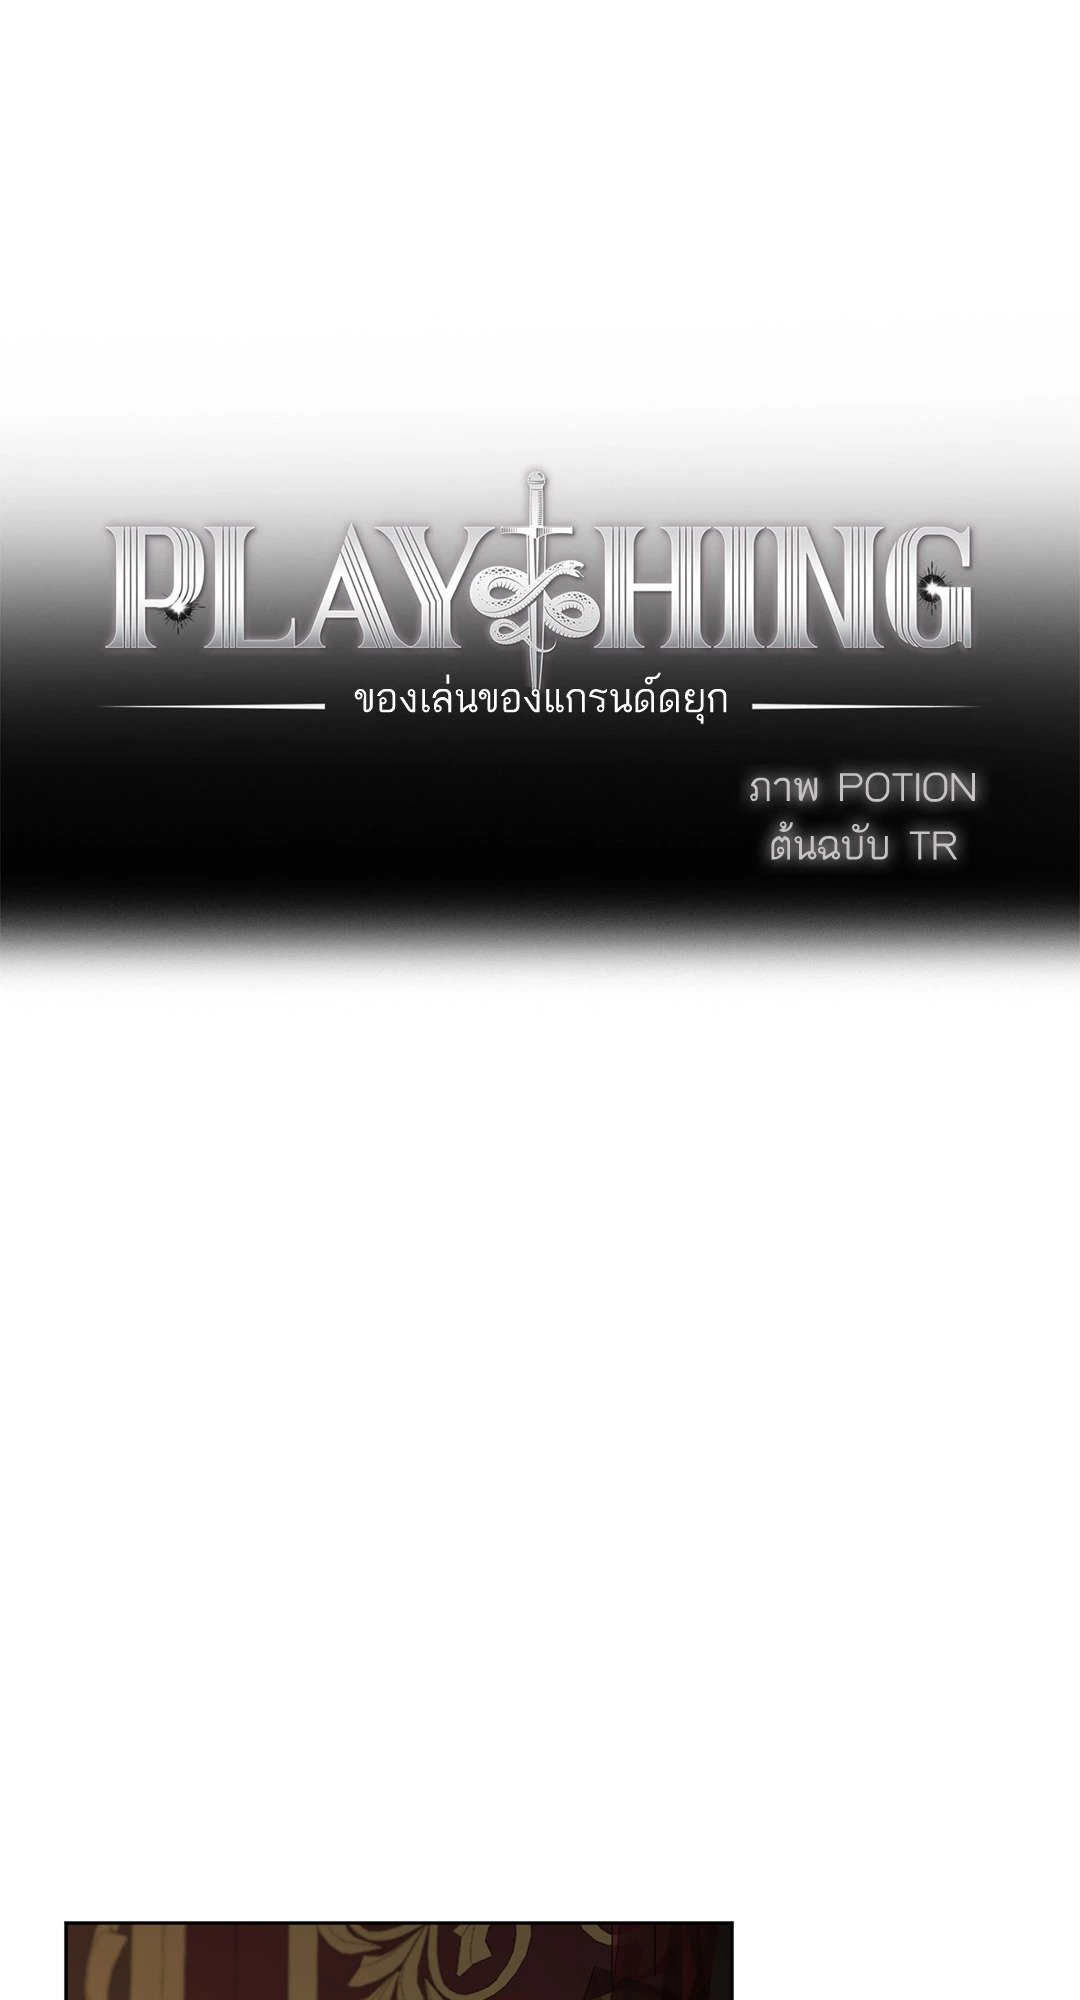 Plaything 27 11